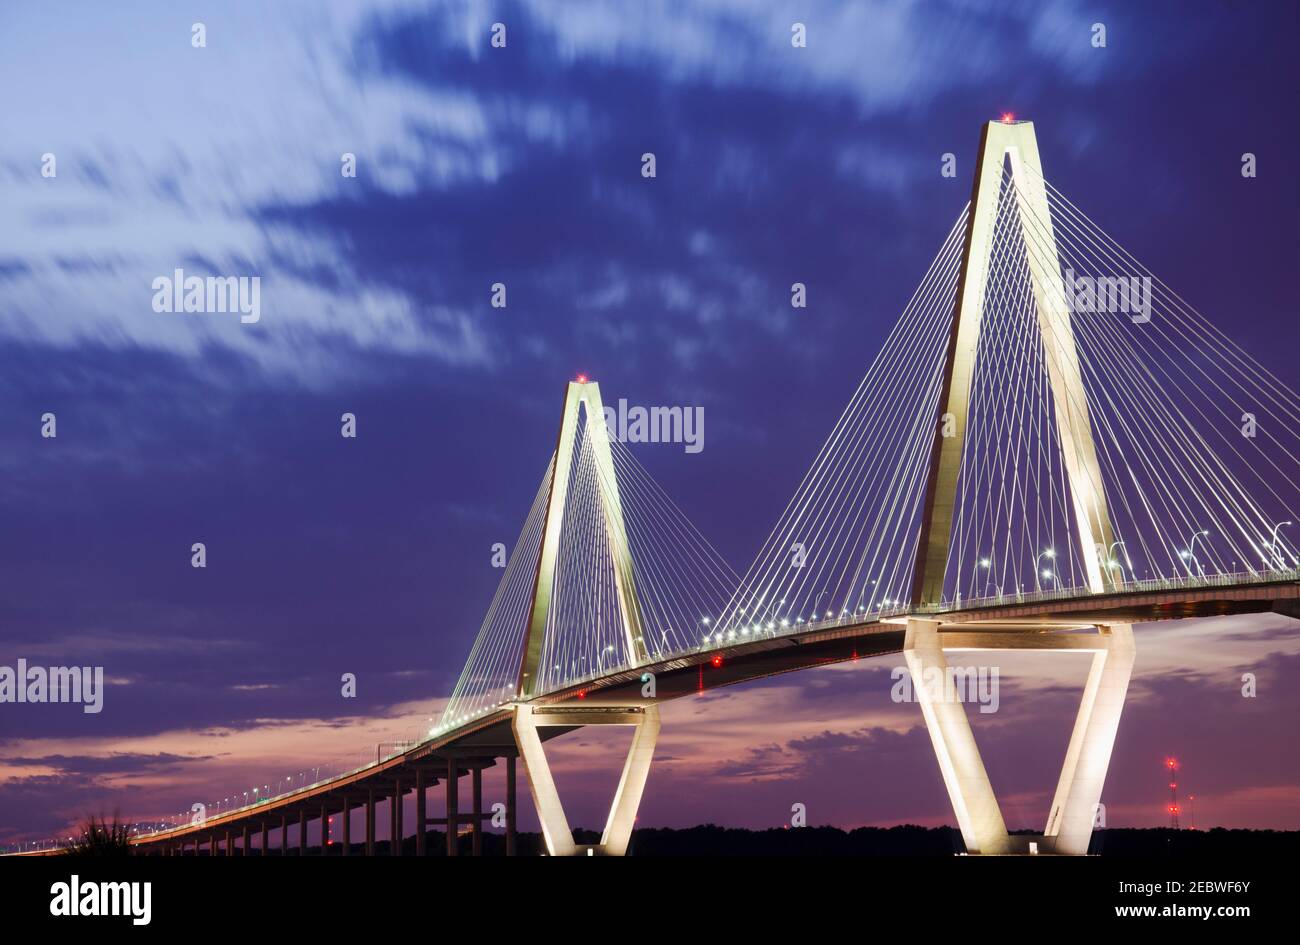 USA, South Carolina, Charleston, Arthur J Ravenel Jr Bridge Stock Photo